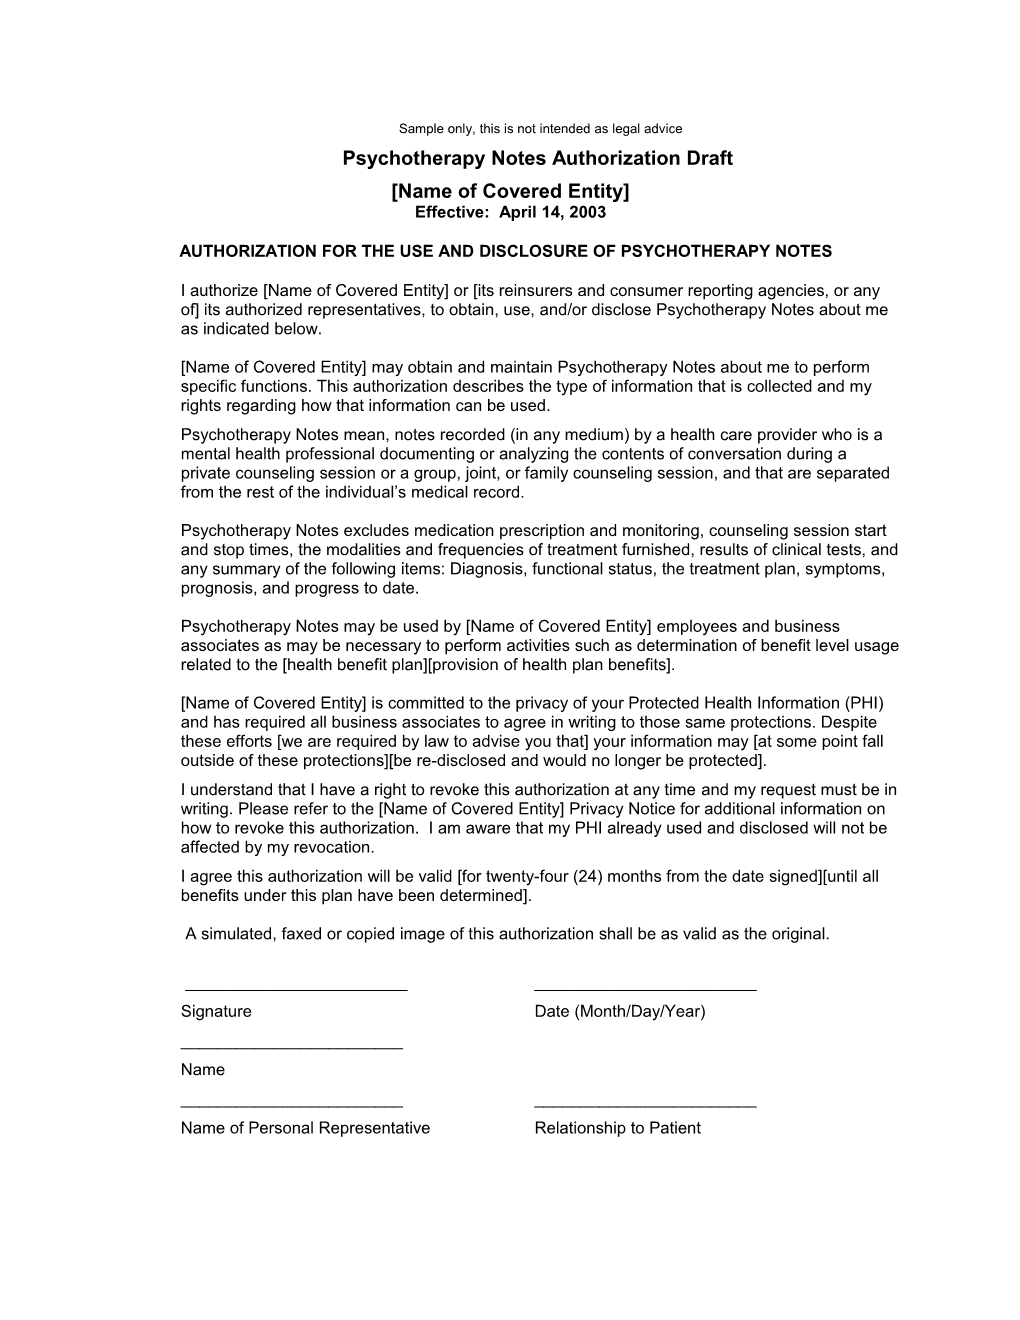 Non-TPO Authorization Draft Revised 12/31/2002